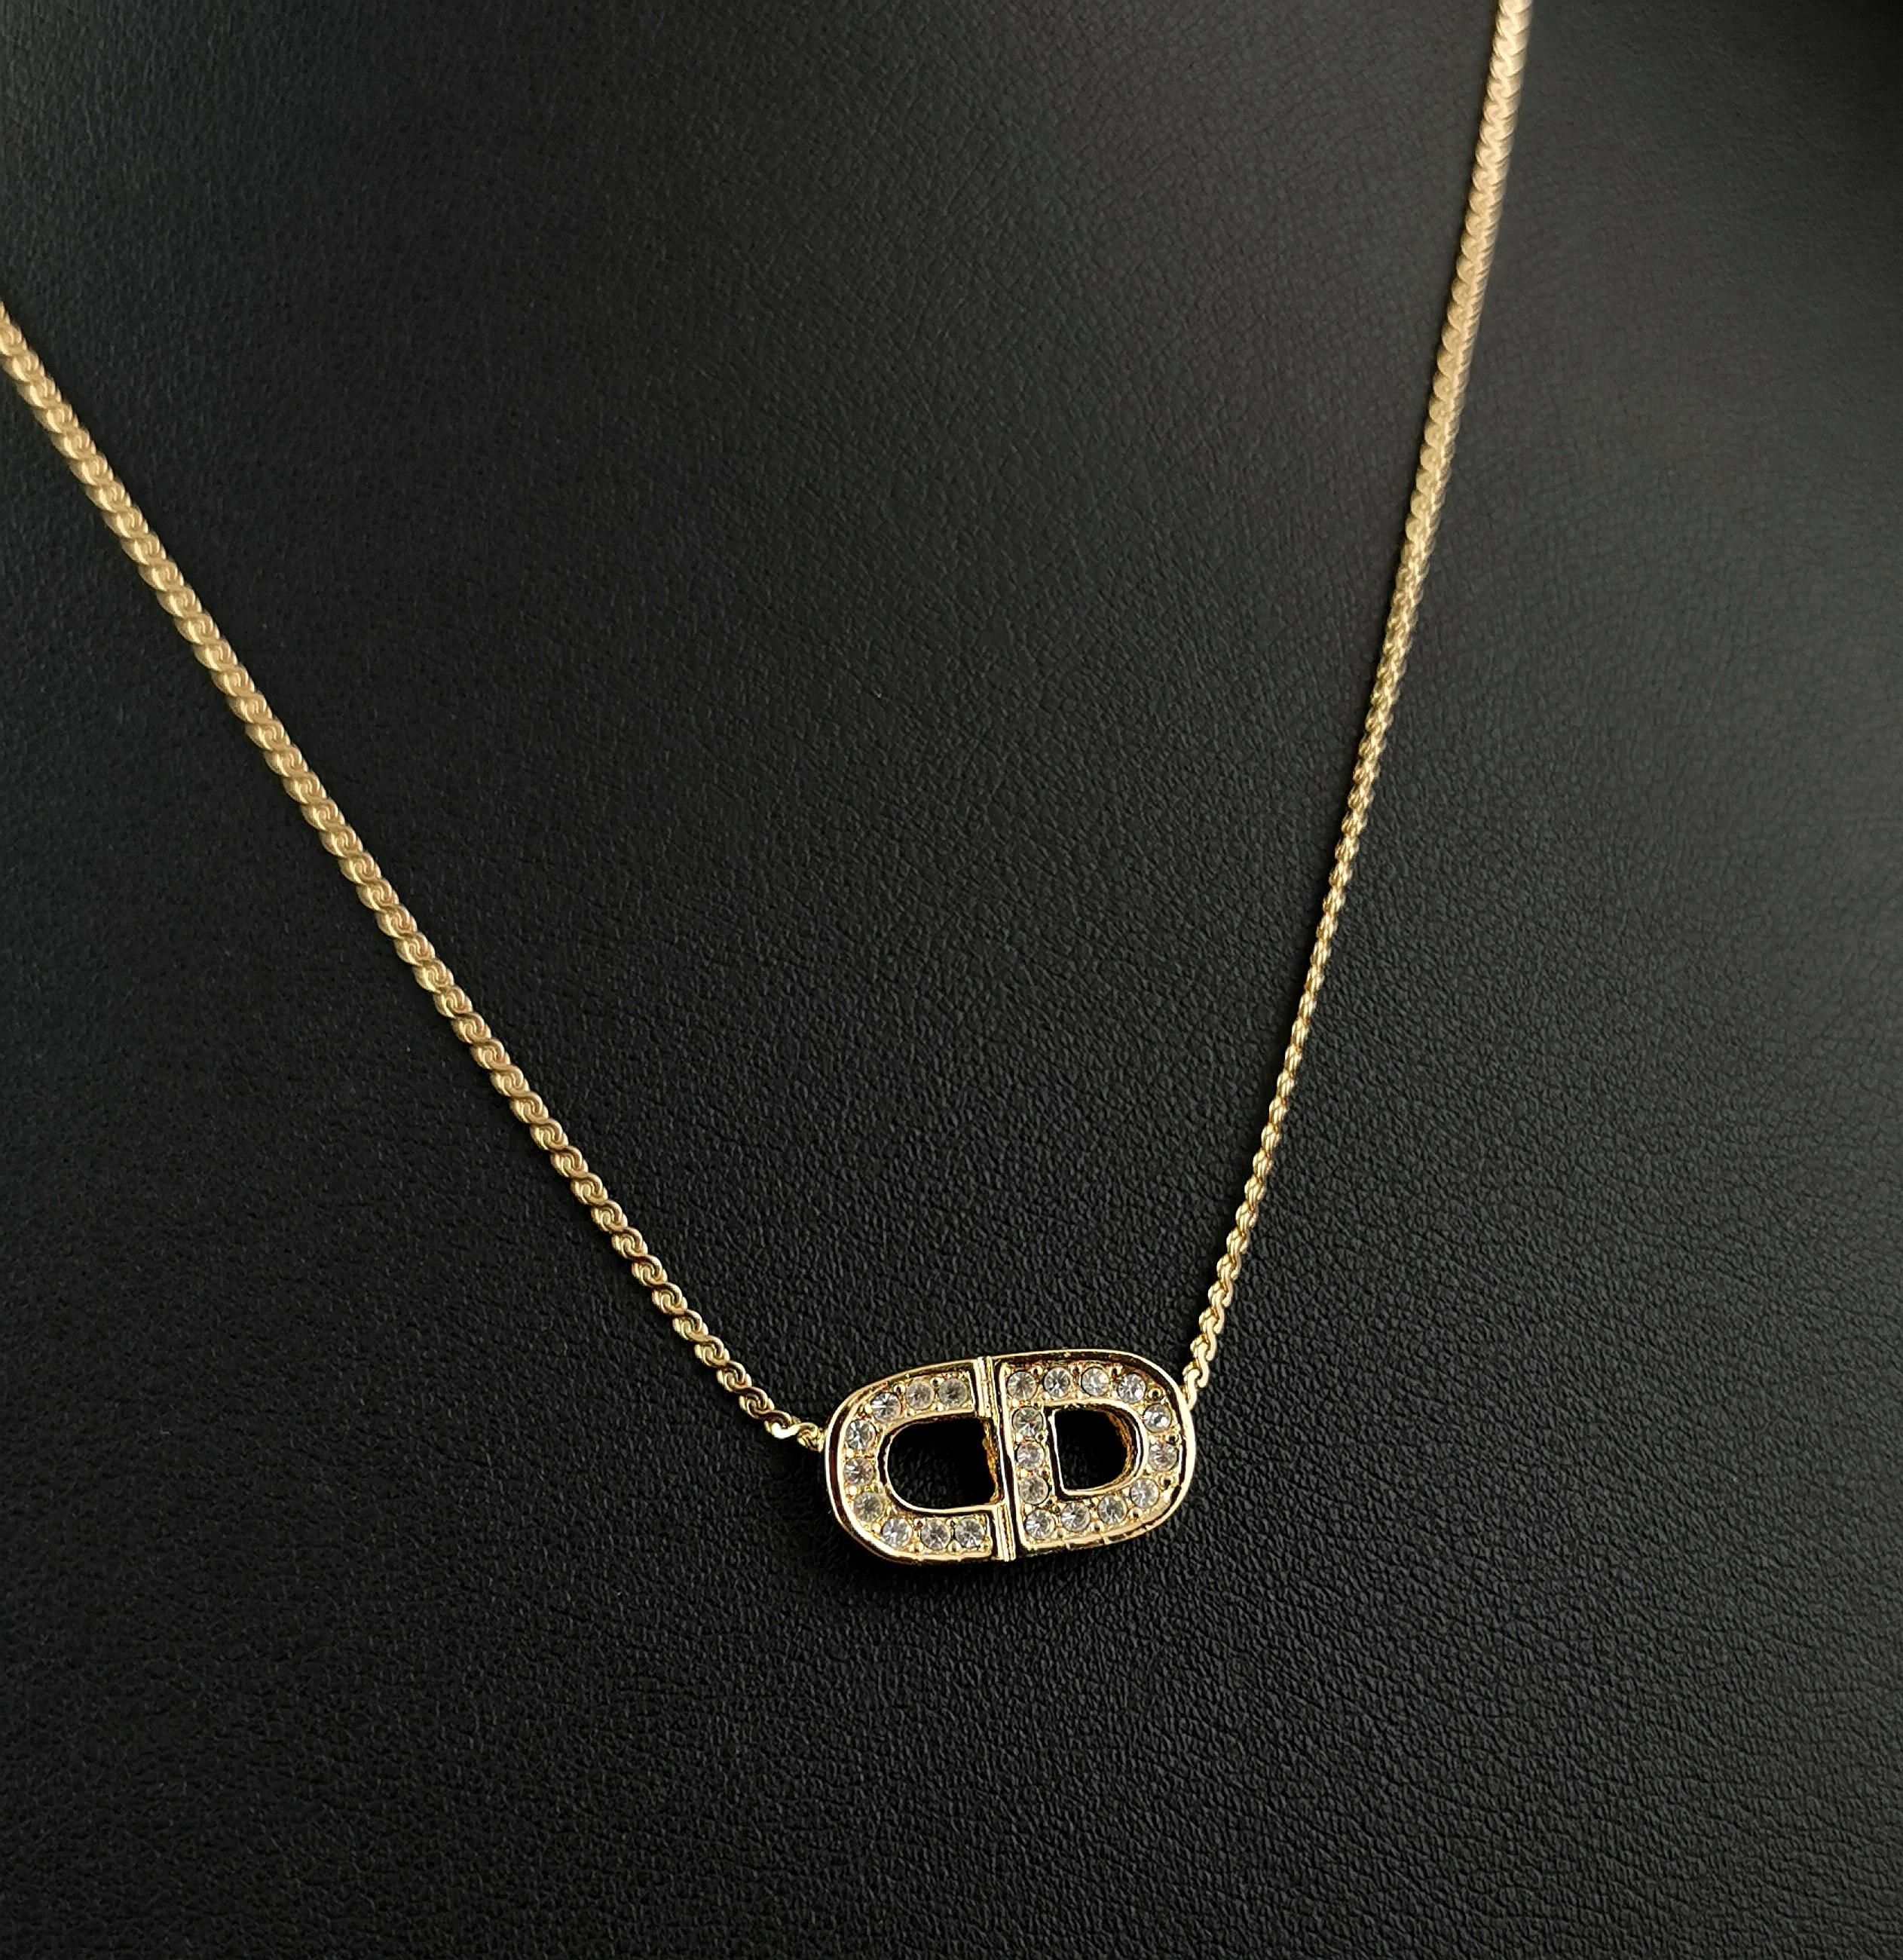  Vintage Christian Dior gold tone diamante logo pendant necklace  For Sale 7